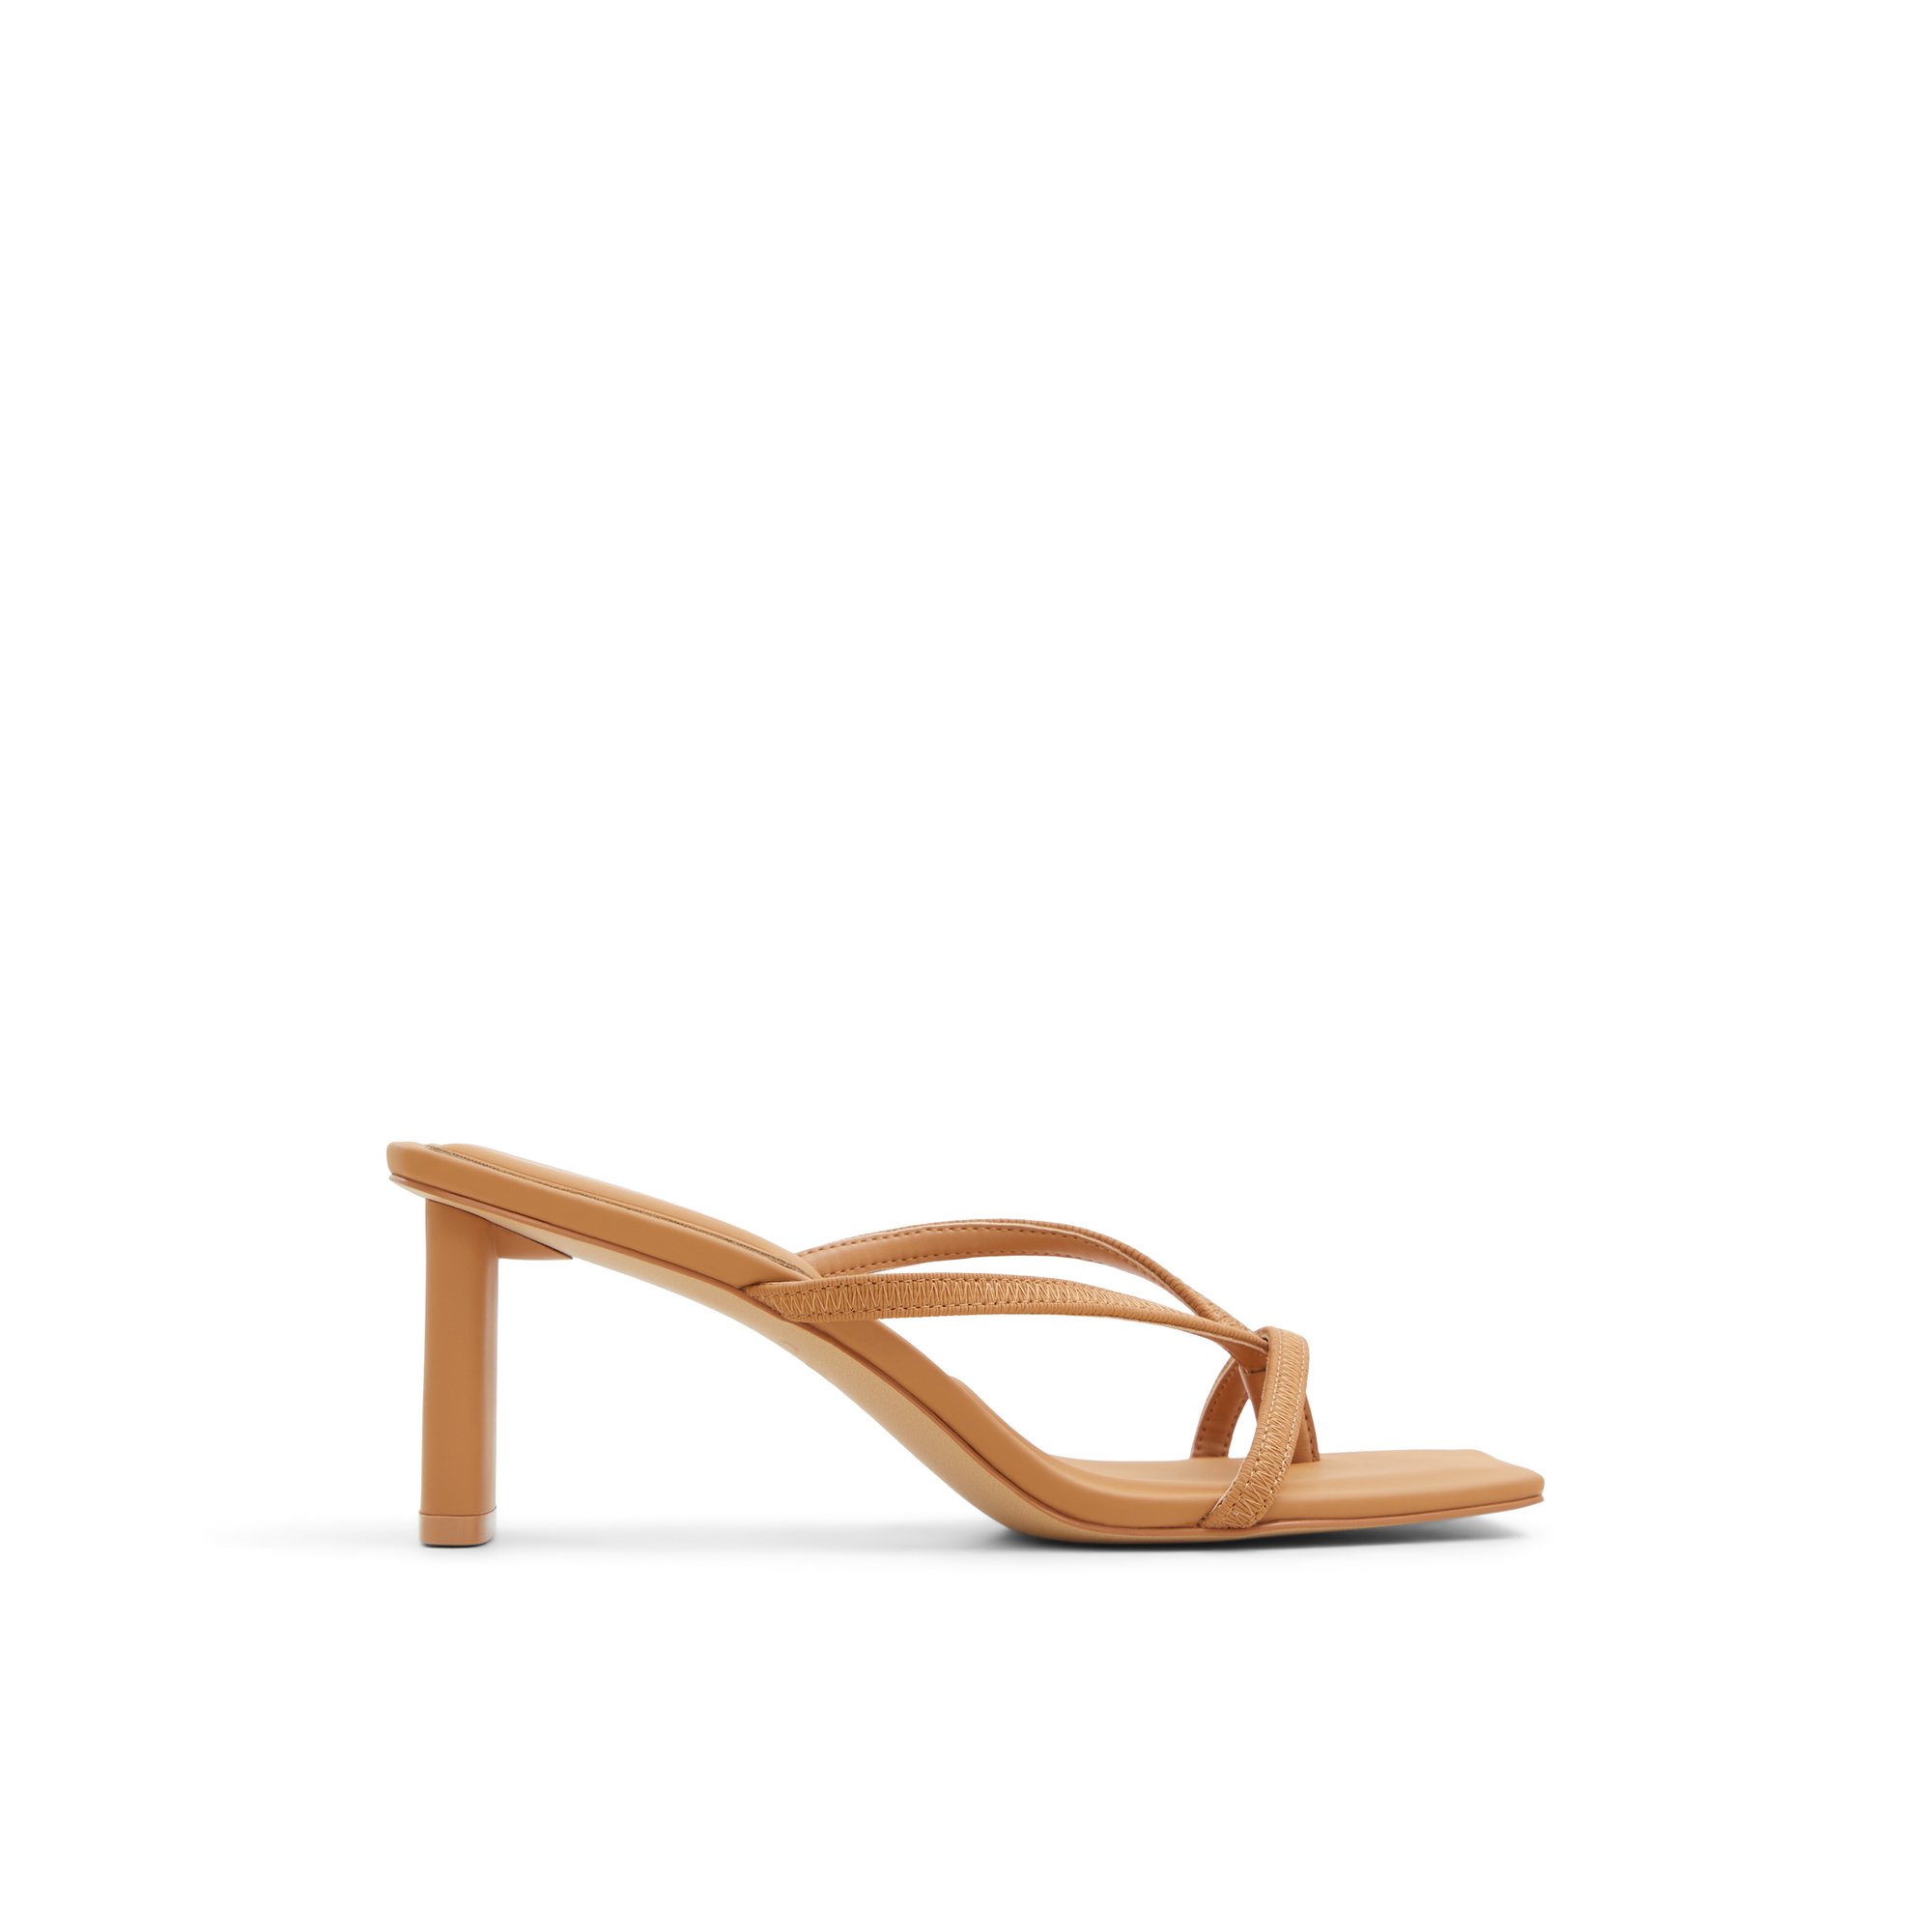 ALDO Sanne - Women's Sandals Strappy - Beige